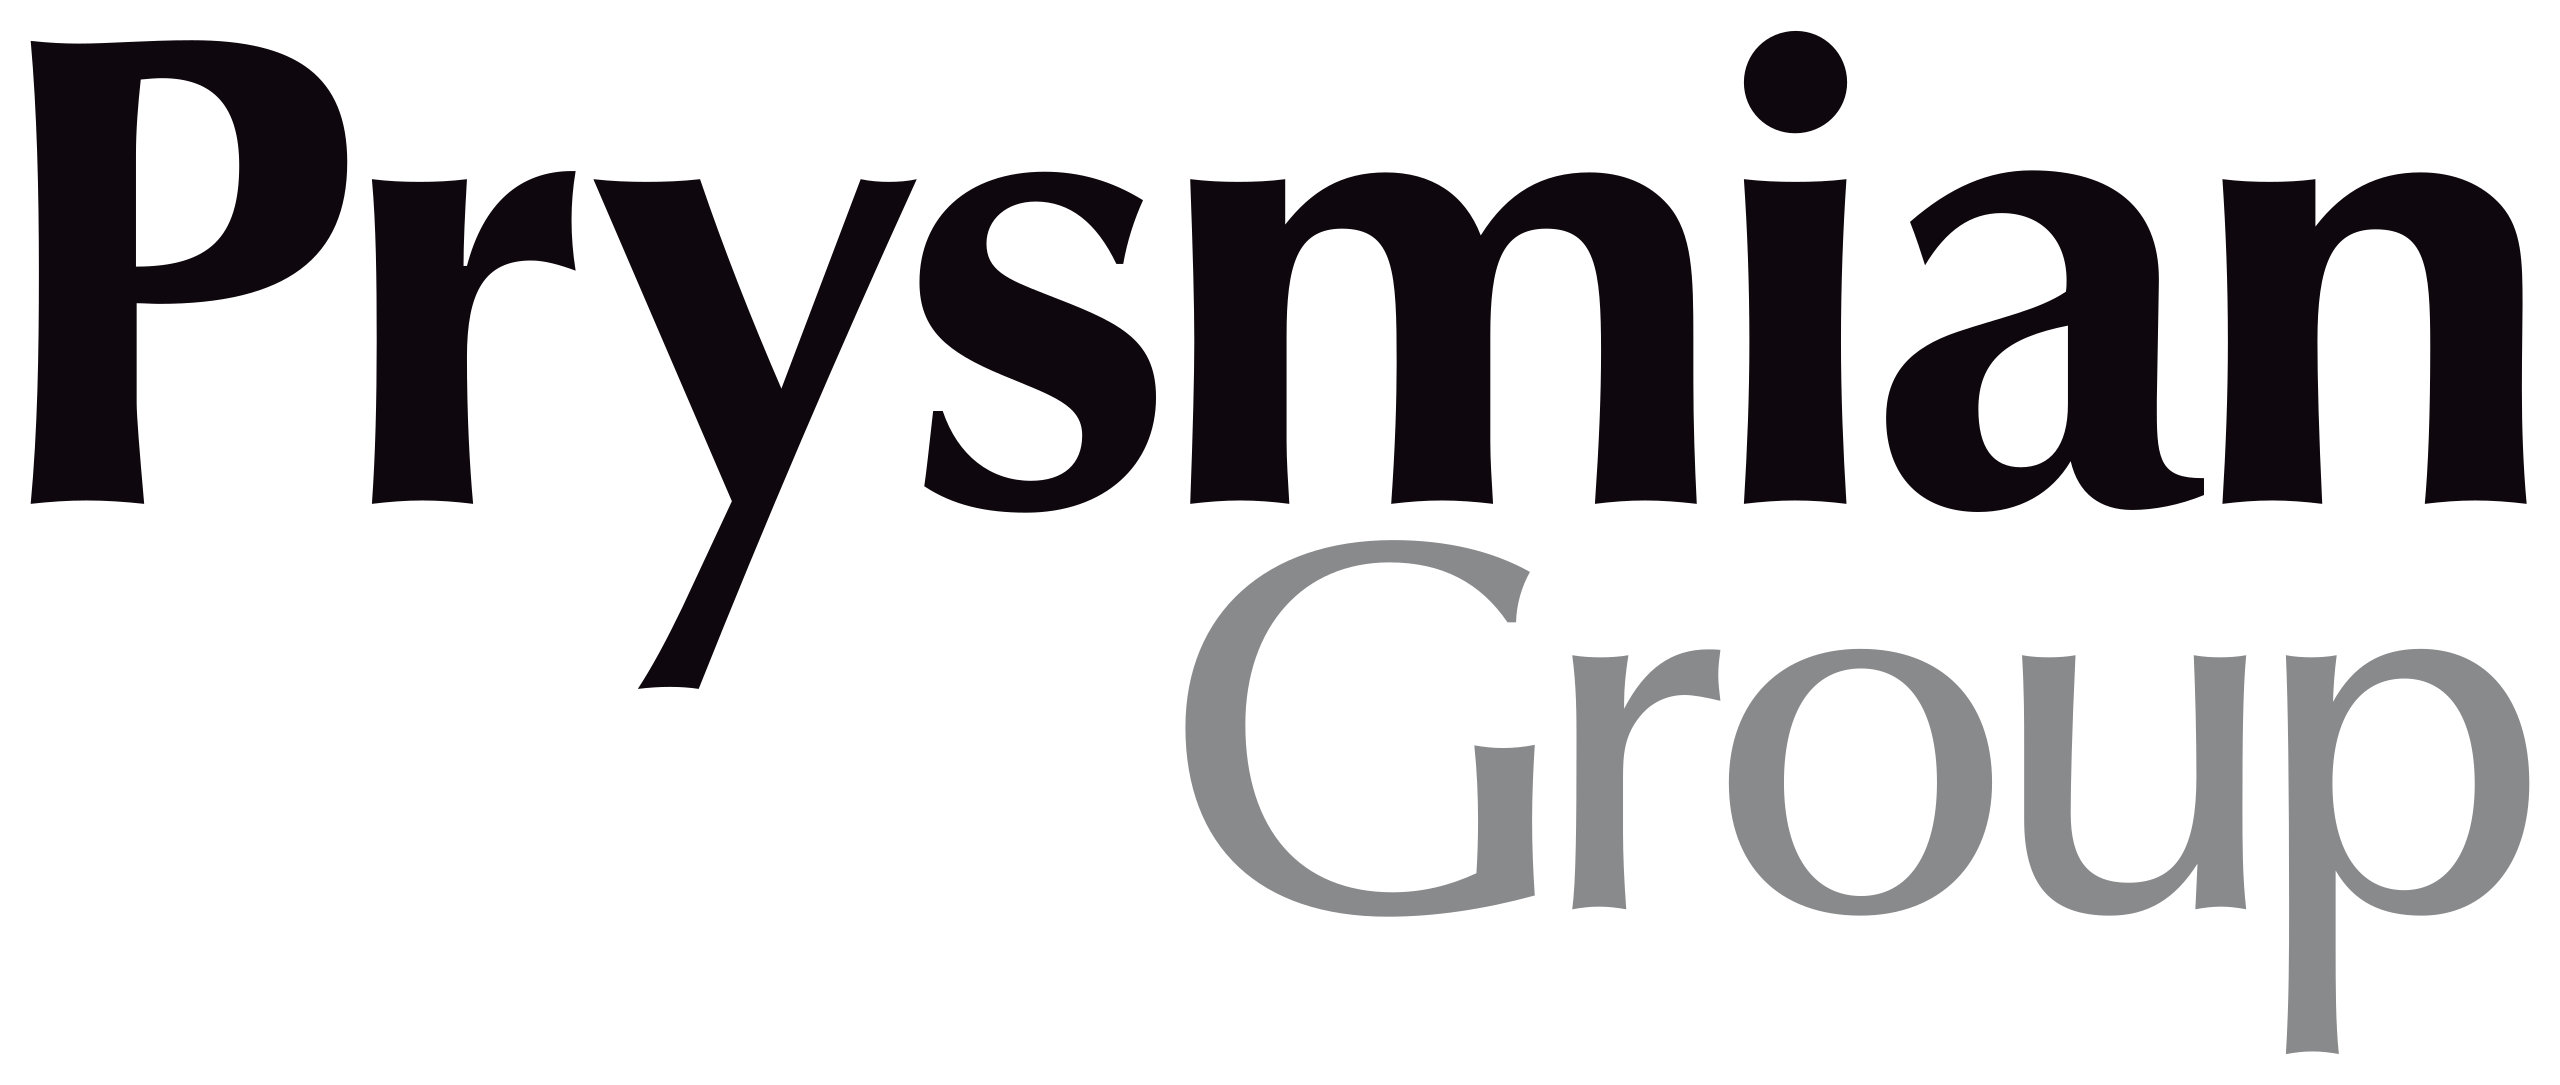 File:Prysmian logo.svg - Wikipedia